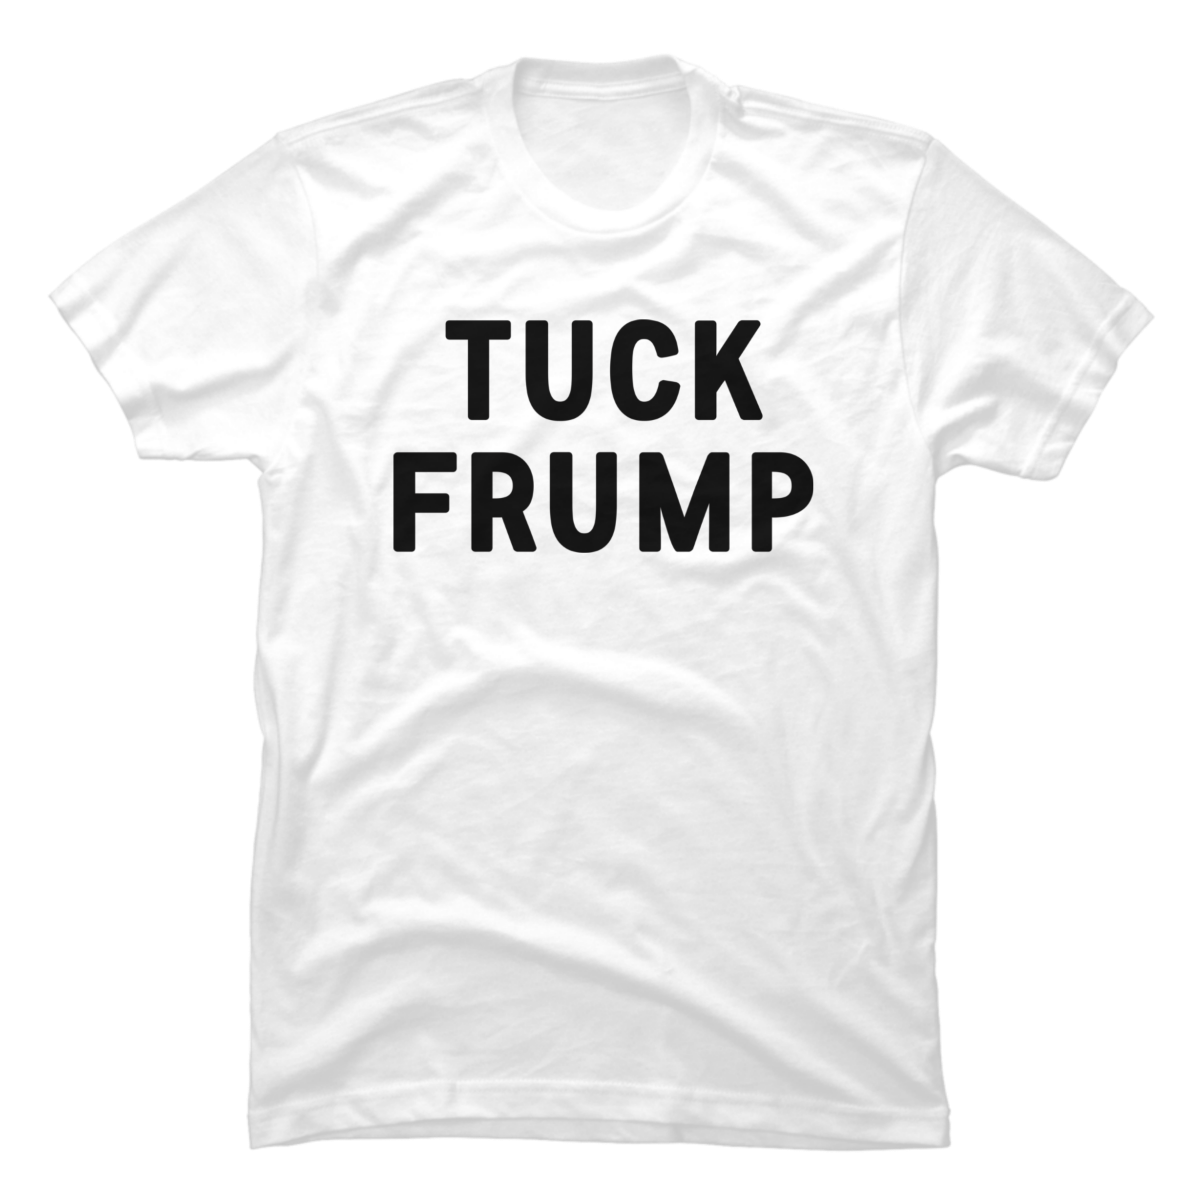 tuck frump t shirt